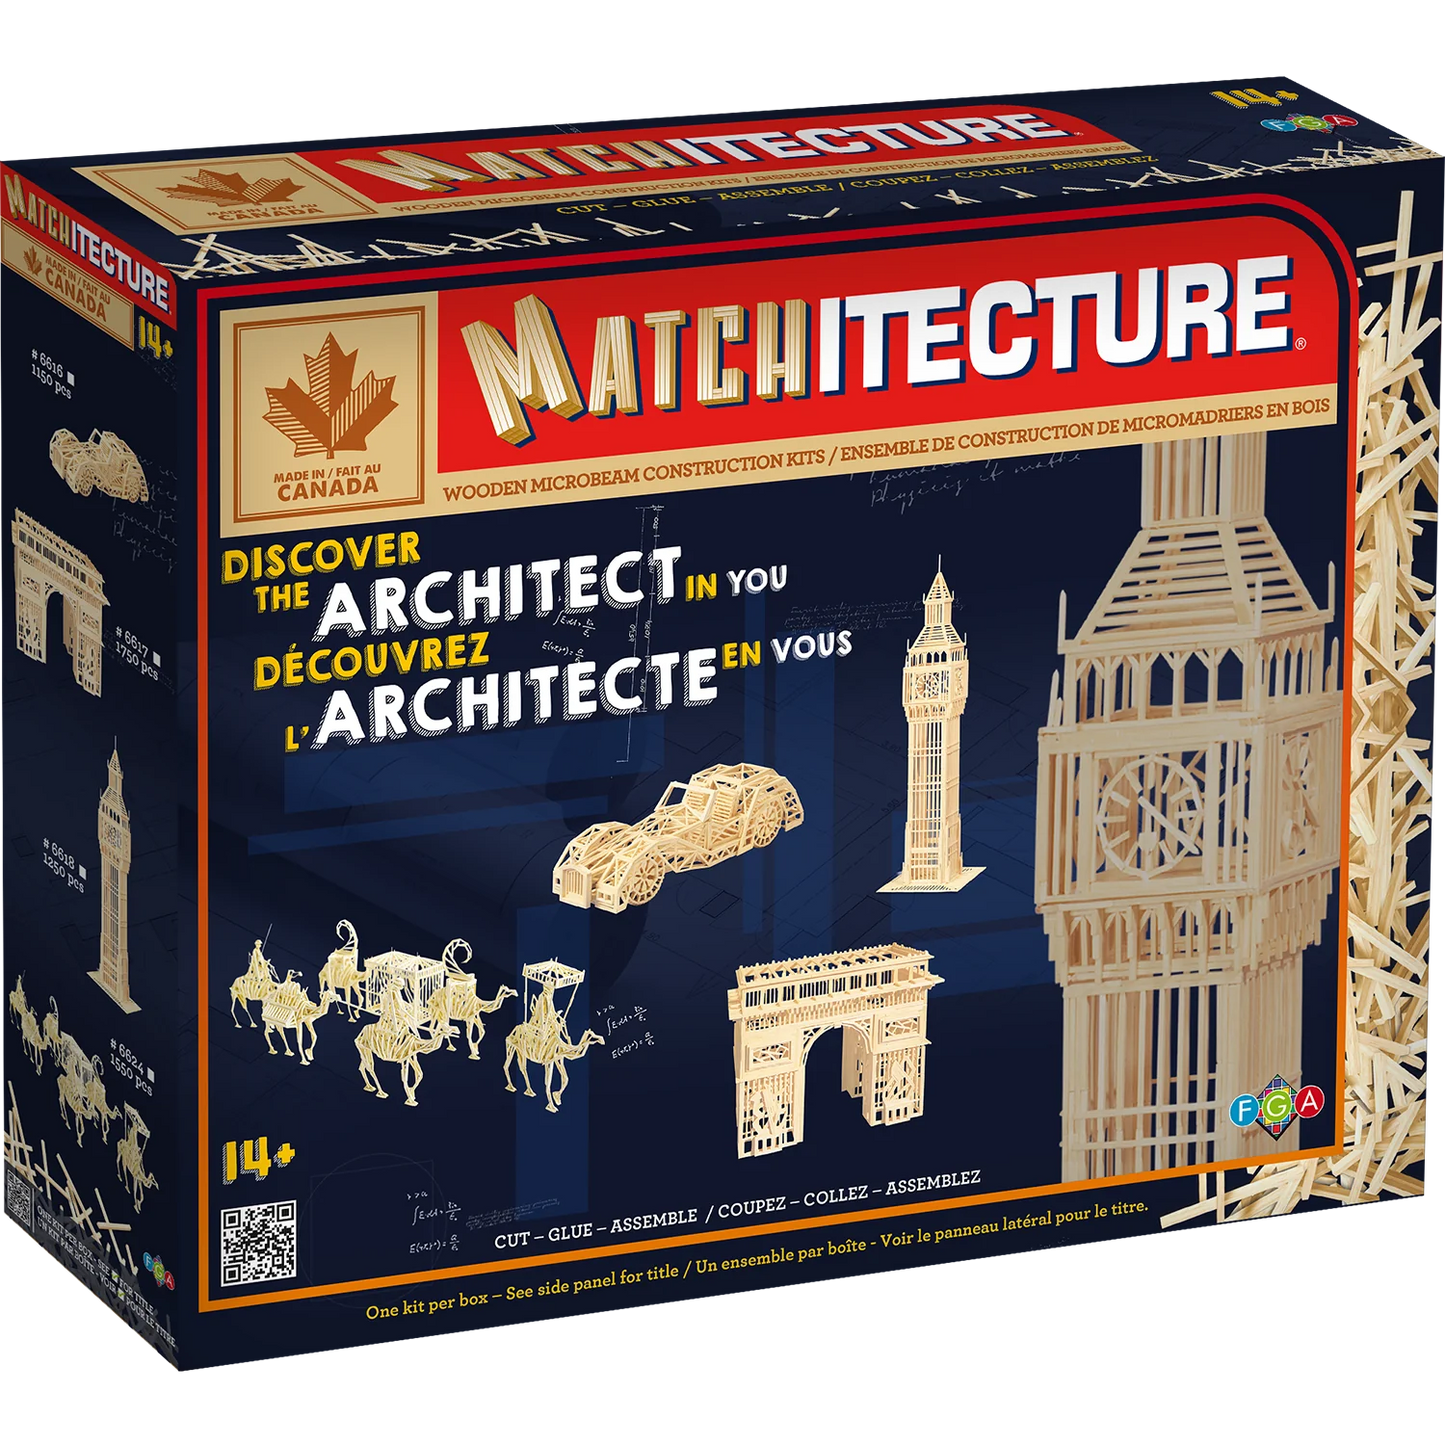 Arch of Triumph - Matchitecture